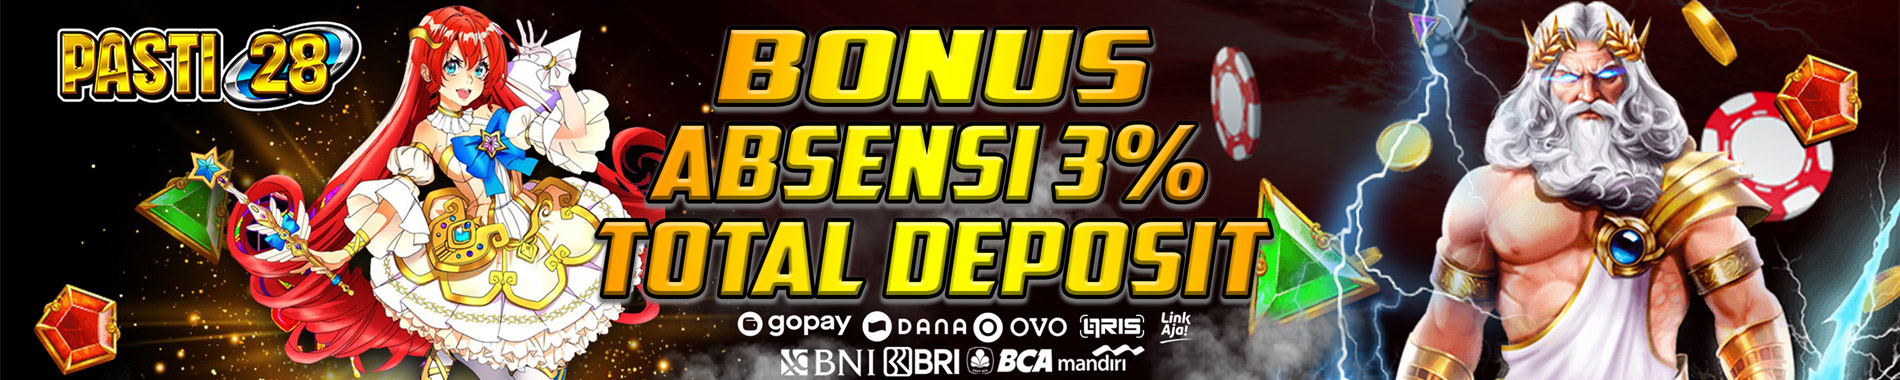 Bonus Absensi Slot Pasti28